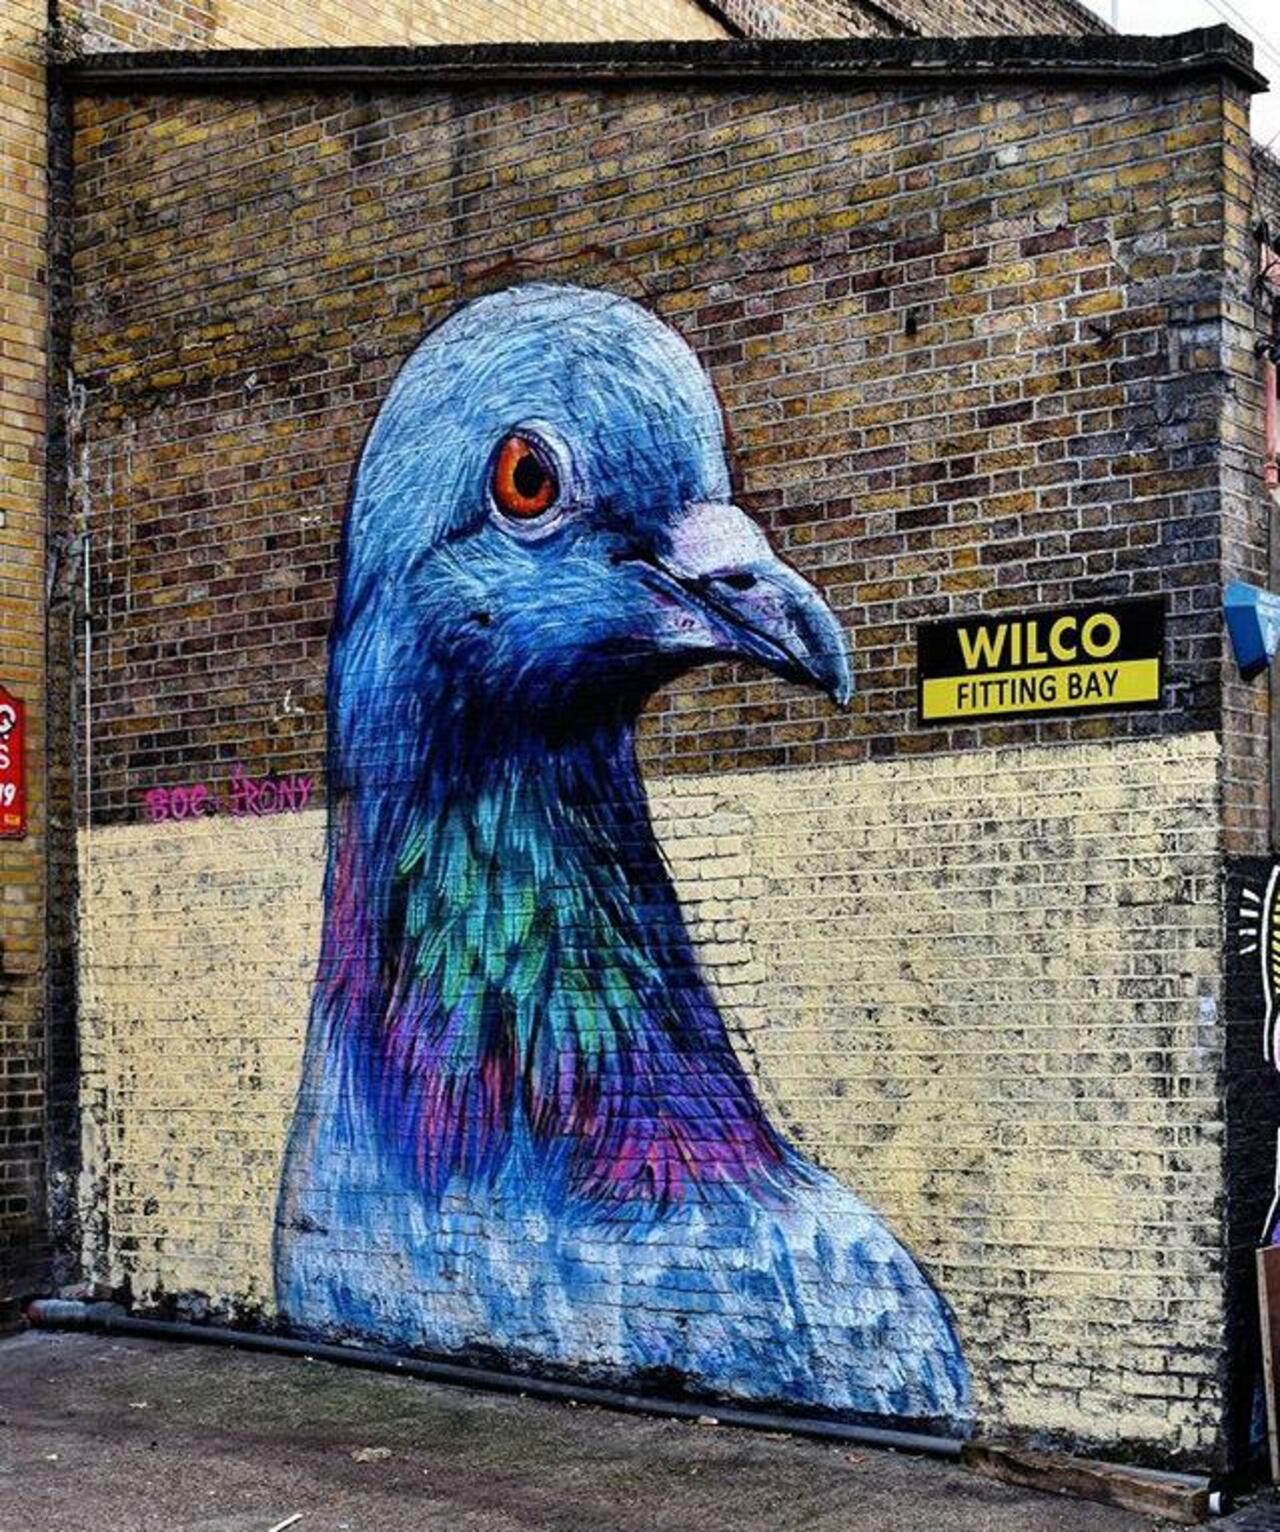 RT belilac "Street Art by Placee Boe & whoamirony in London 

#art #graffiti #mural #streetart http://t.co/eK1ICwxkP7"